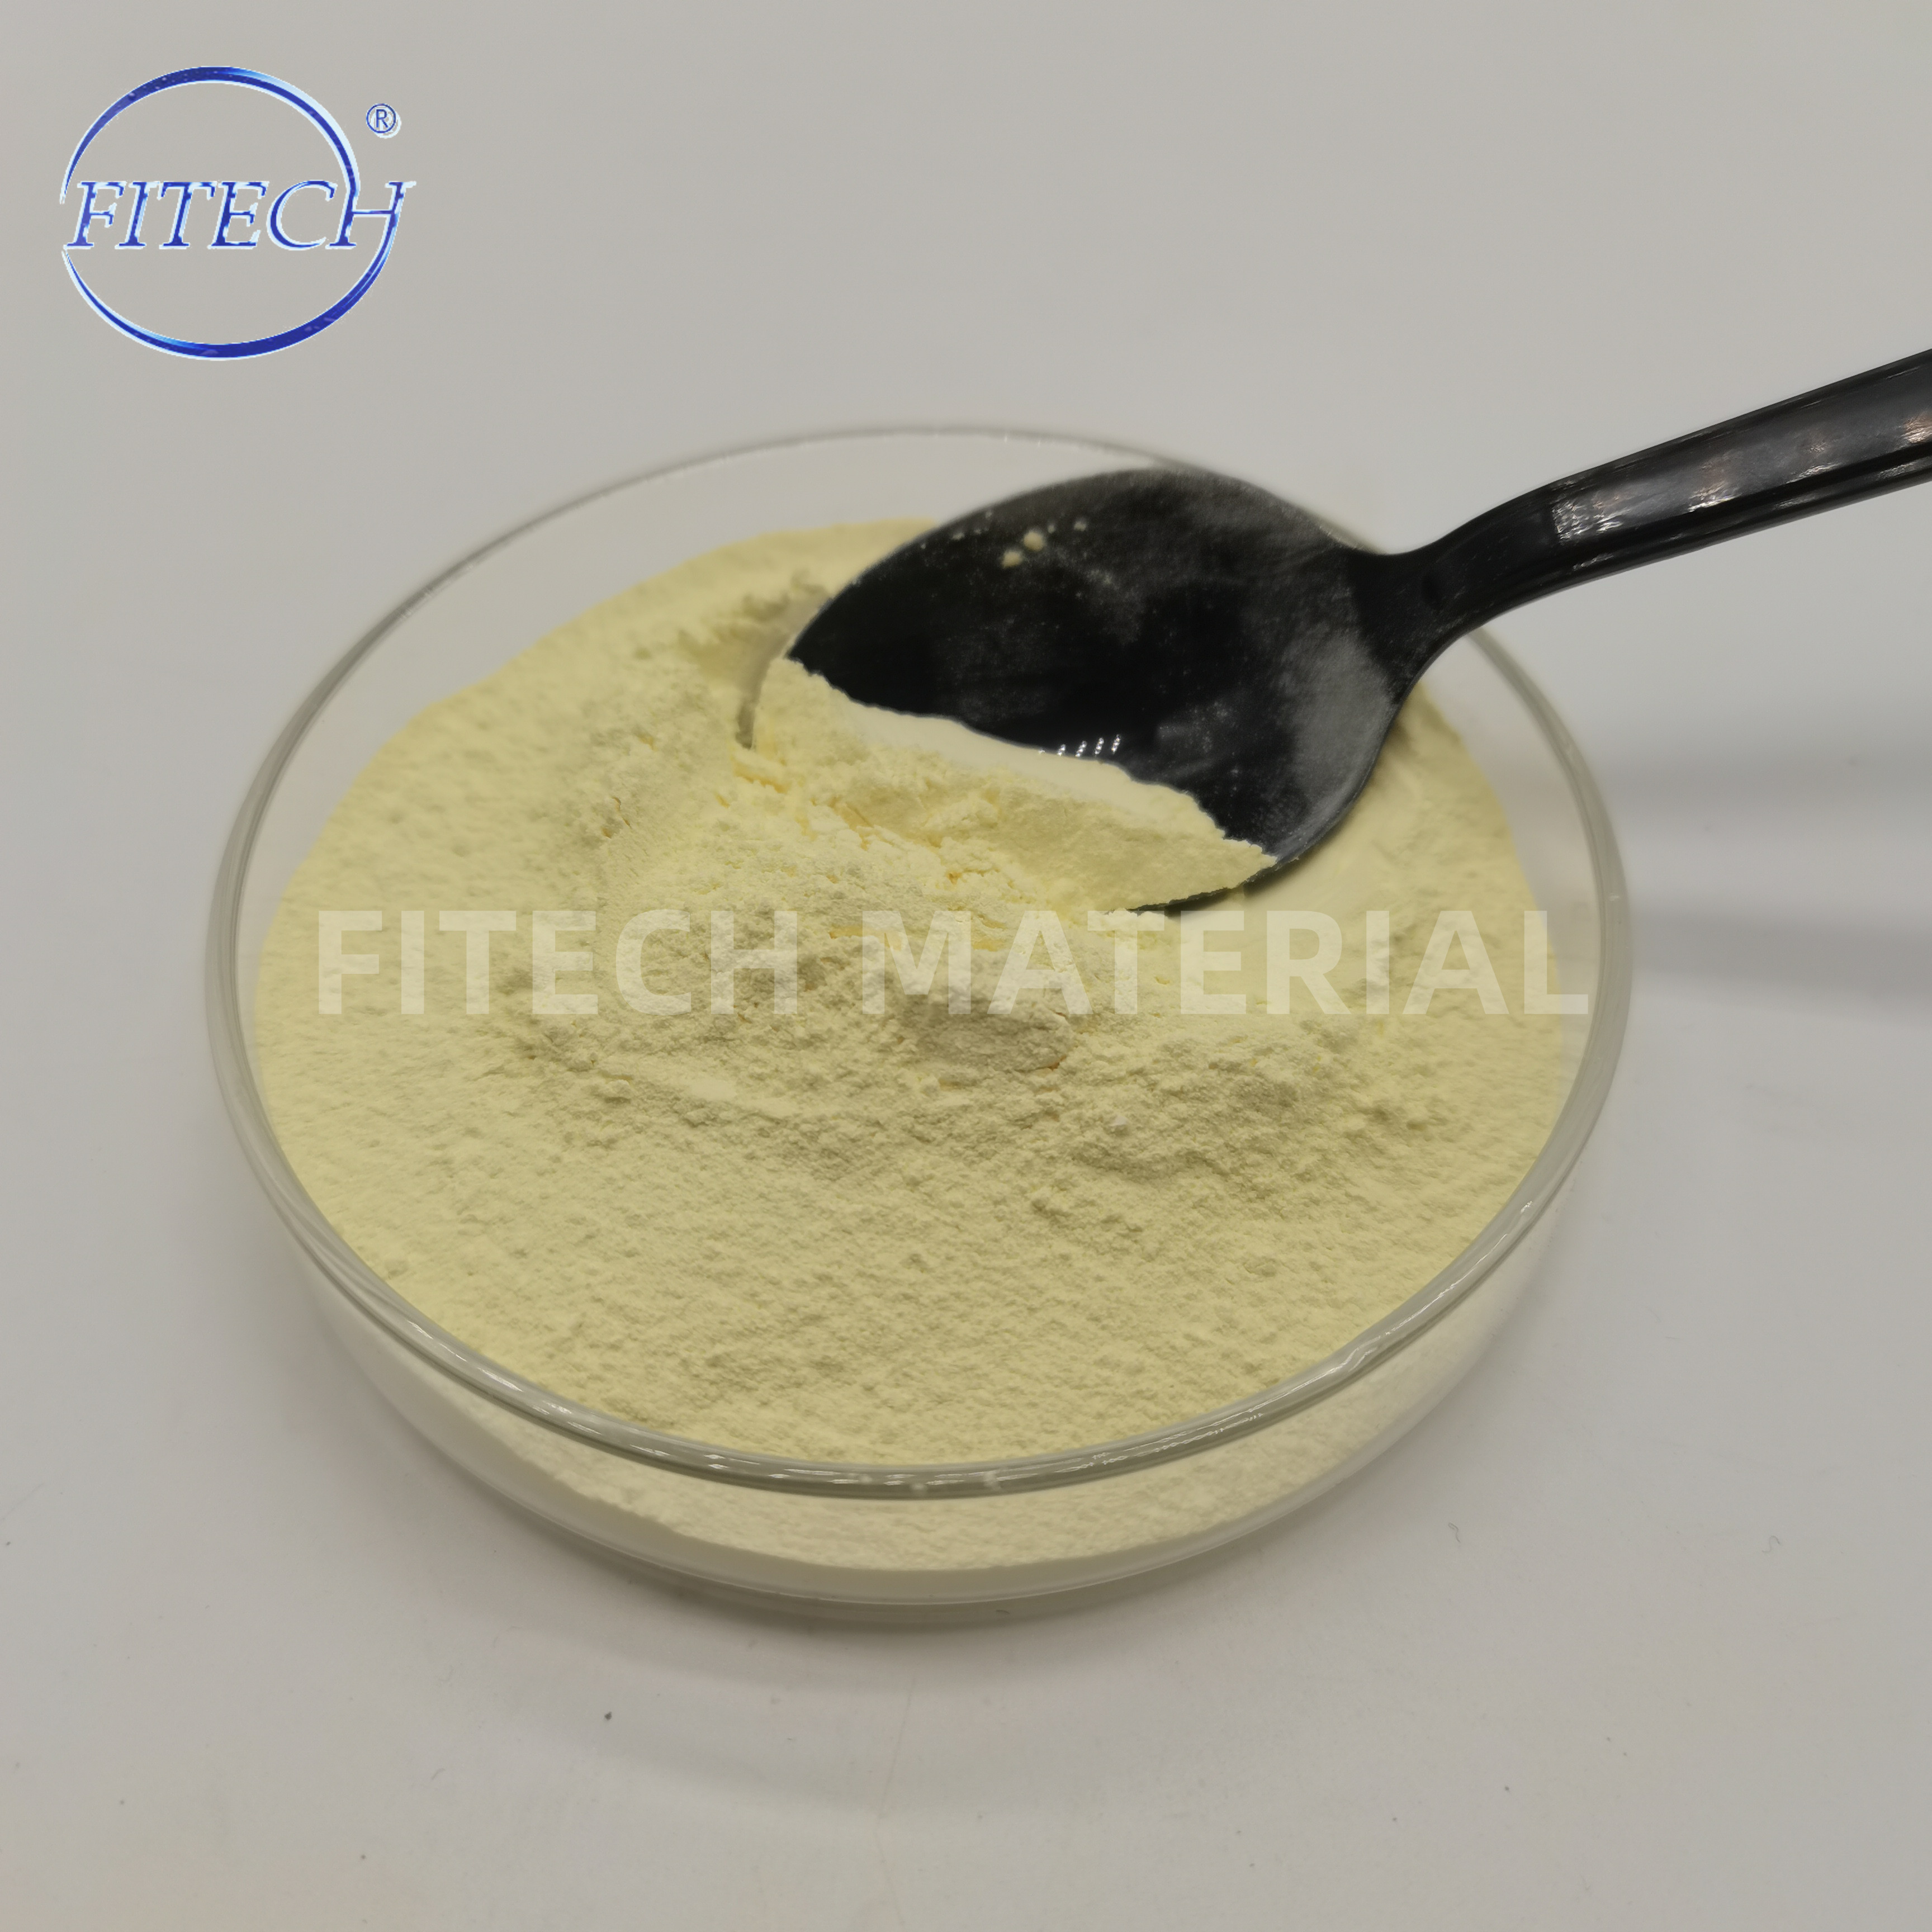 Rare Earth Powder Cerium Oxide From China Factory